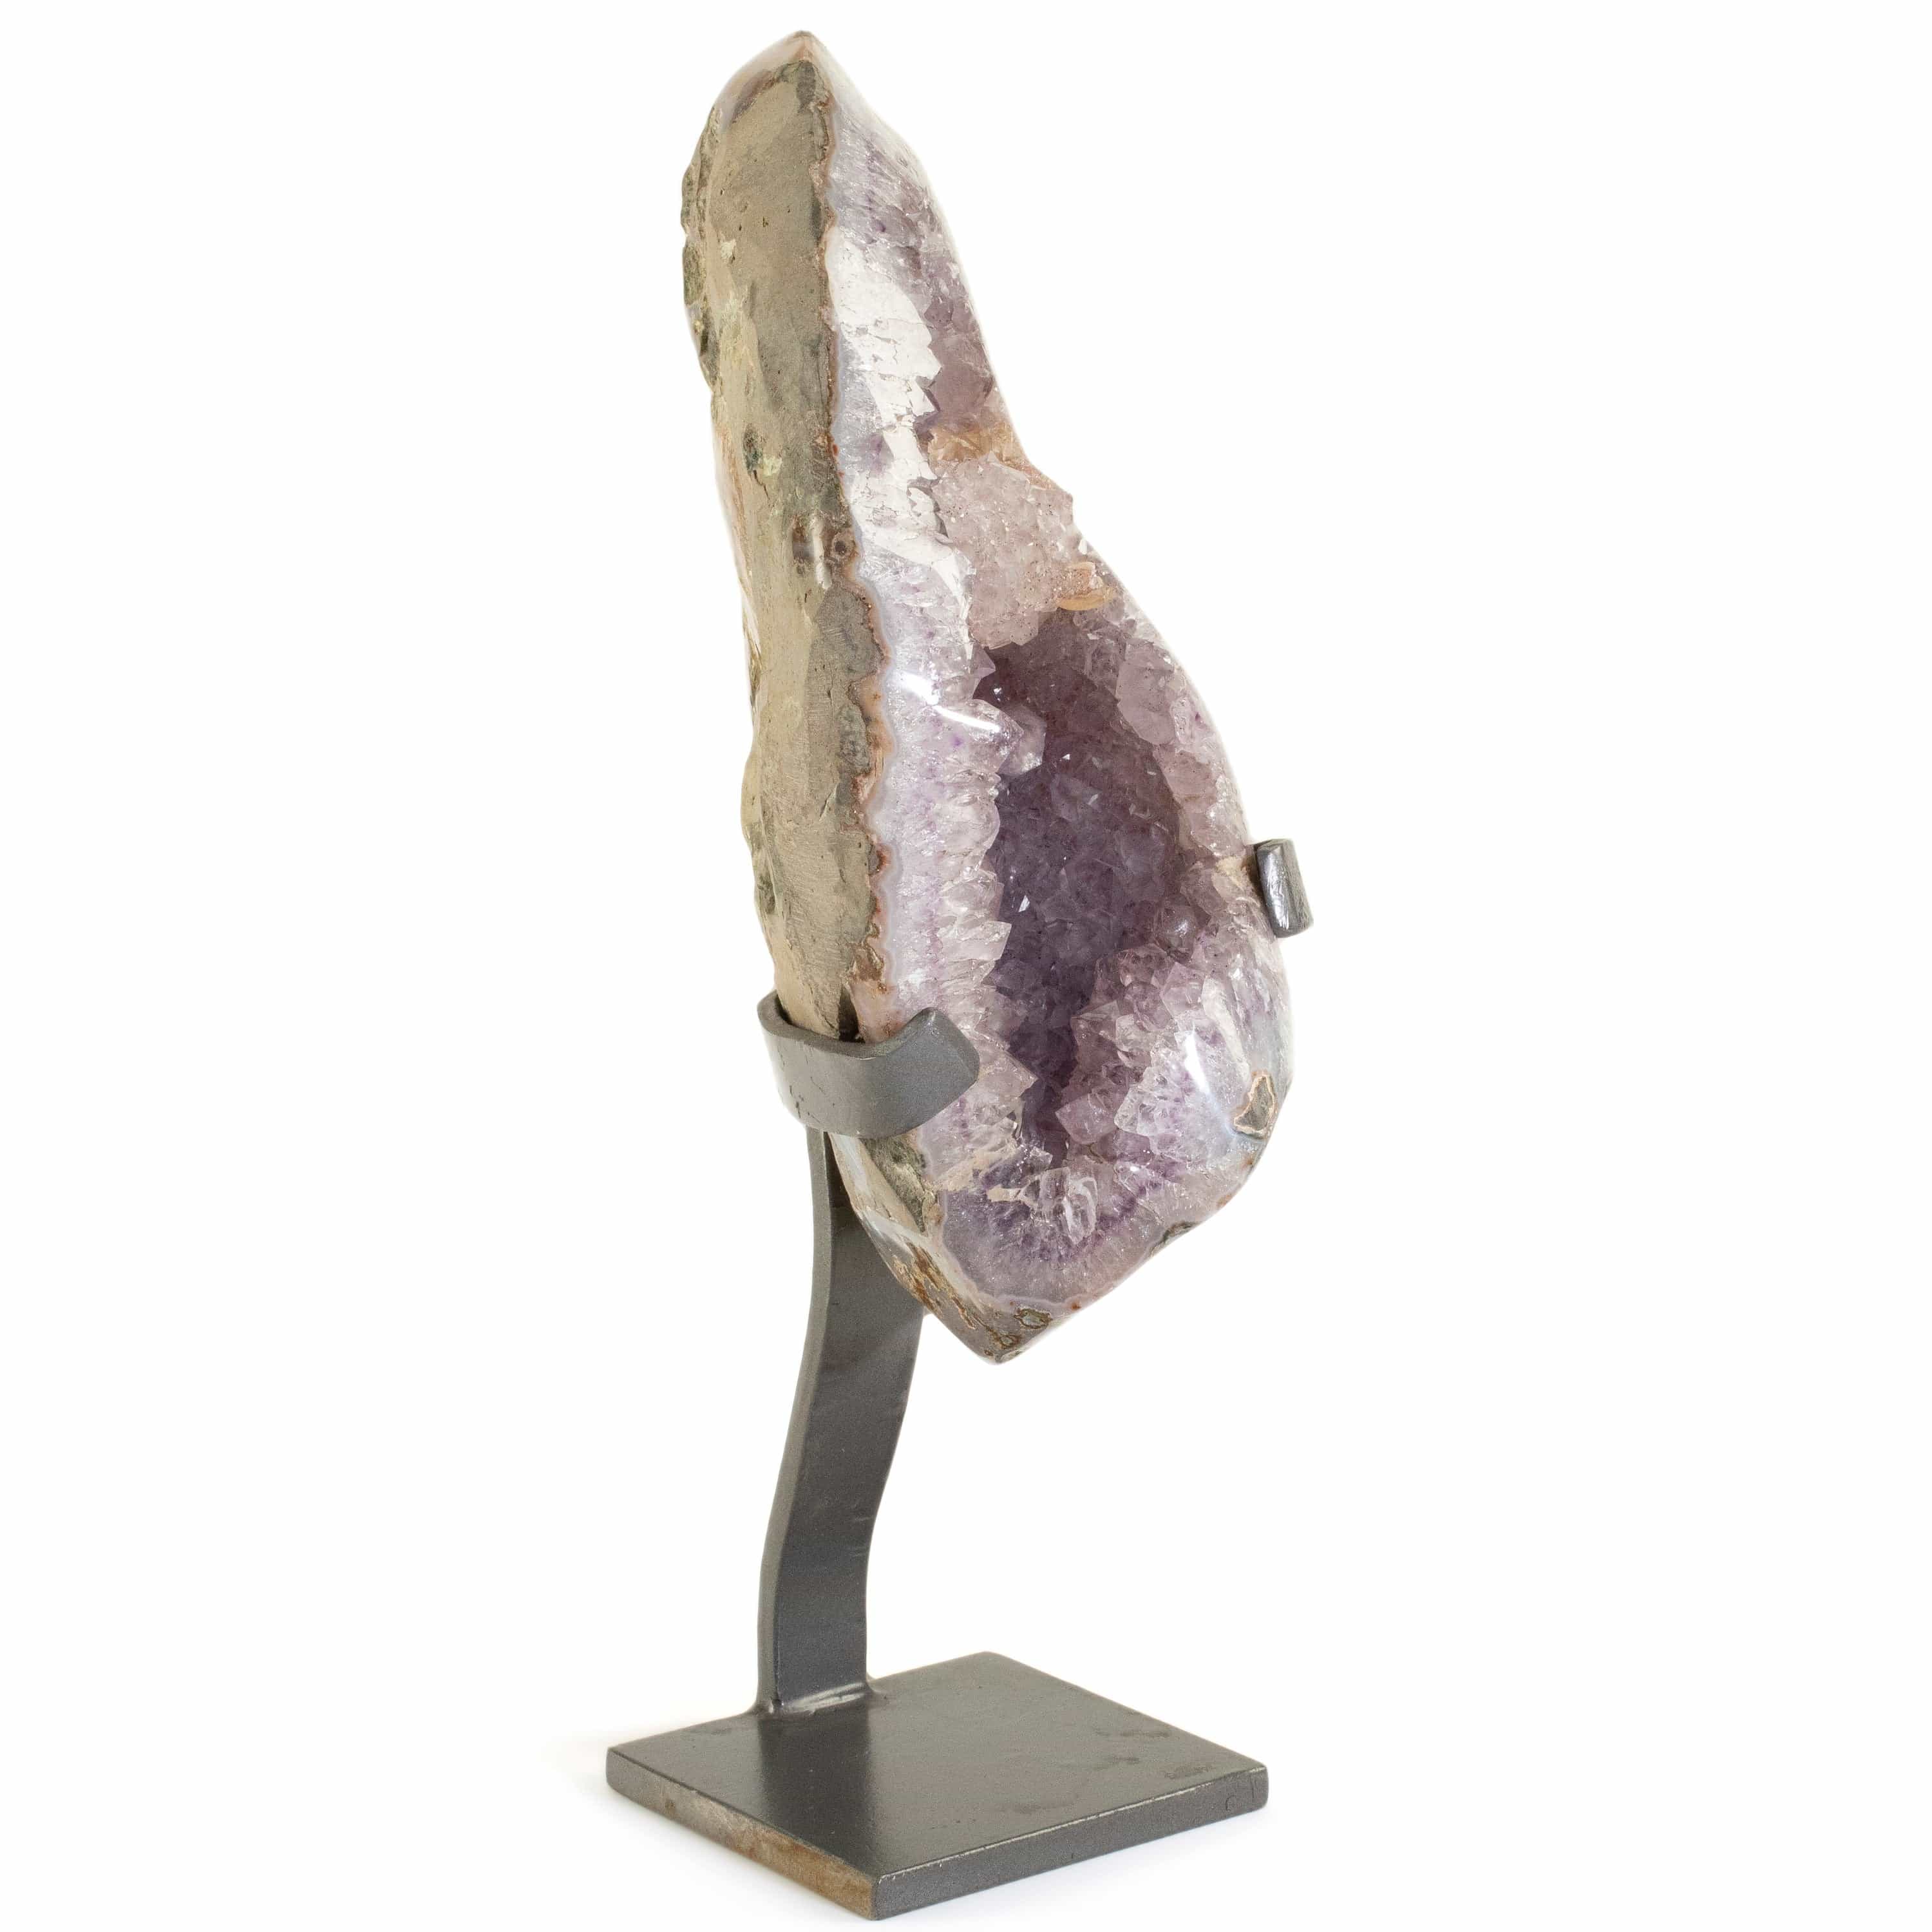 Kalifano Amethyst Uruguayan Amethyst Geode on Custom Stand - 9.2 lbs / 15 in. UAG2100.017